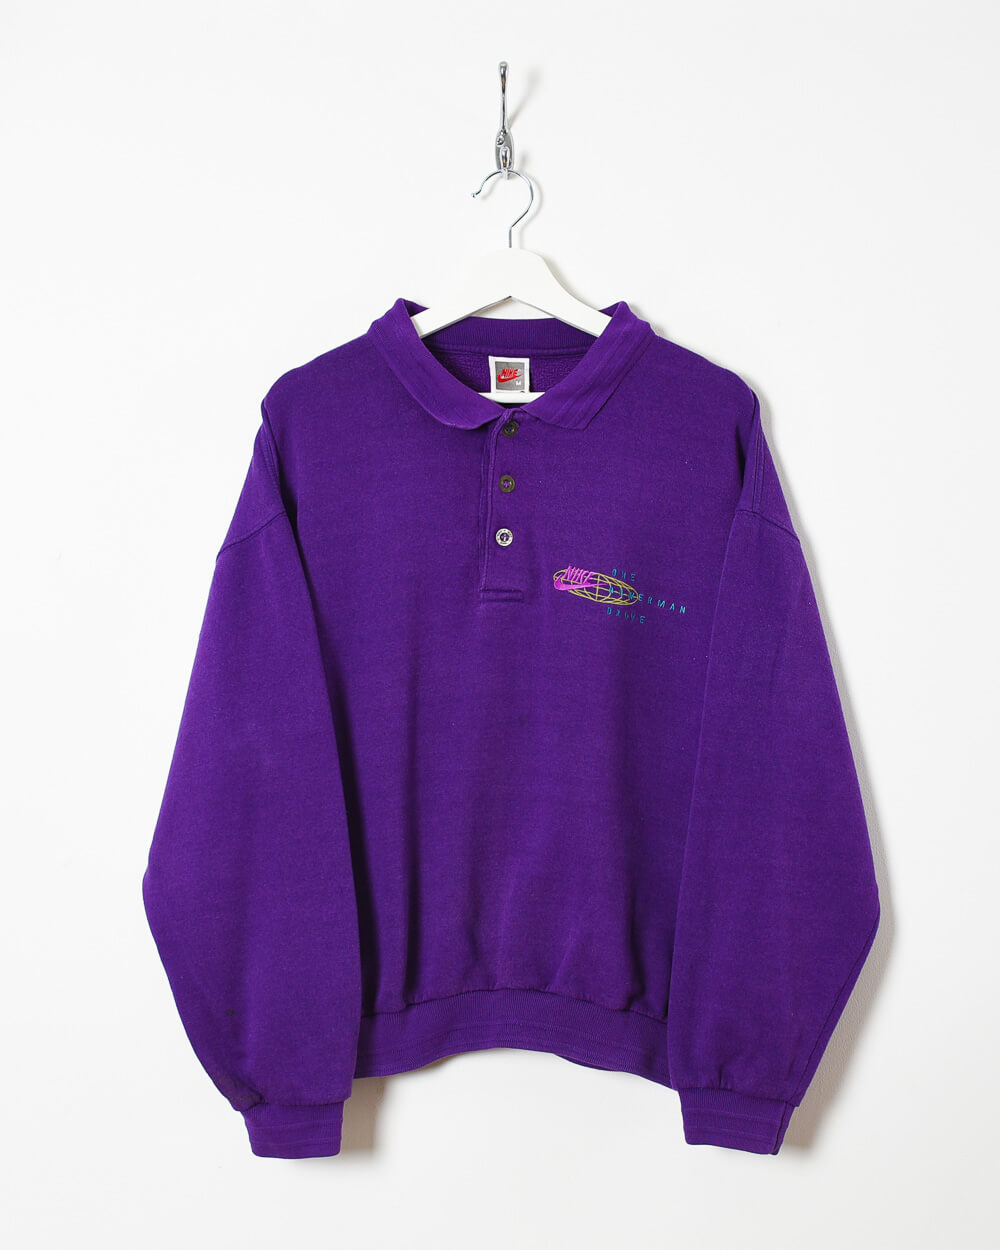 Purple Nike One Bowerman Drive Sweatshirt - Medium